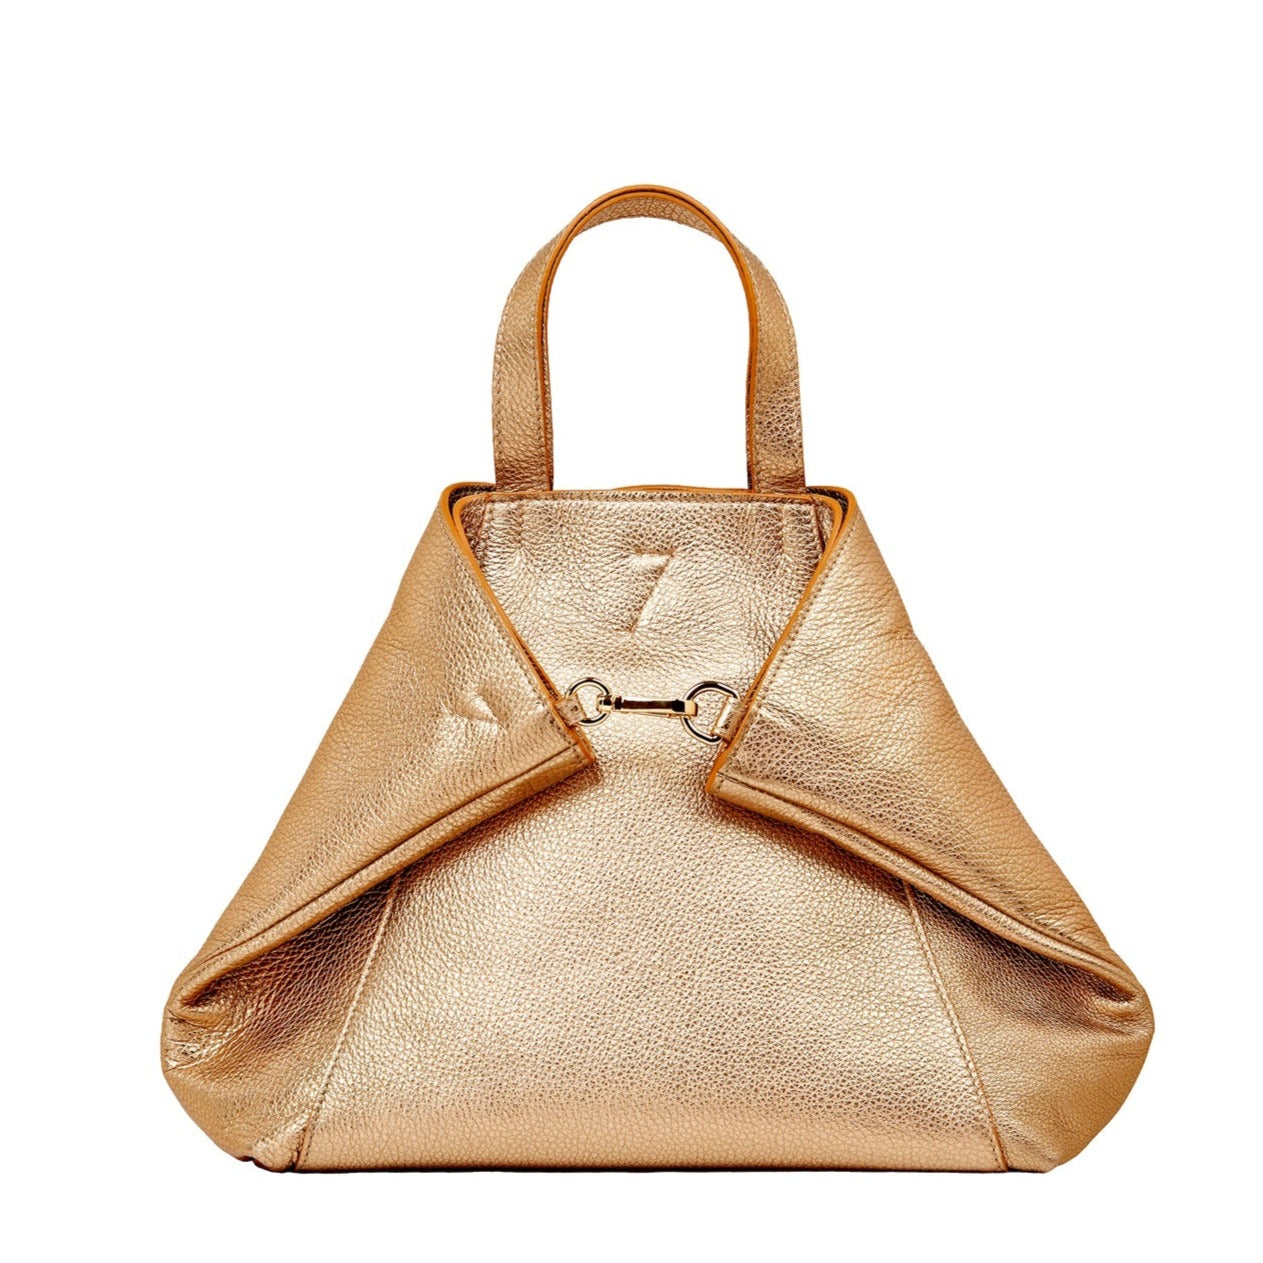 Women's handbag in golden leather